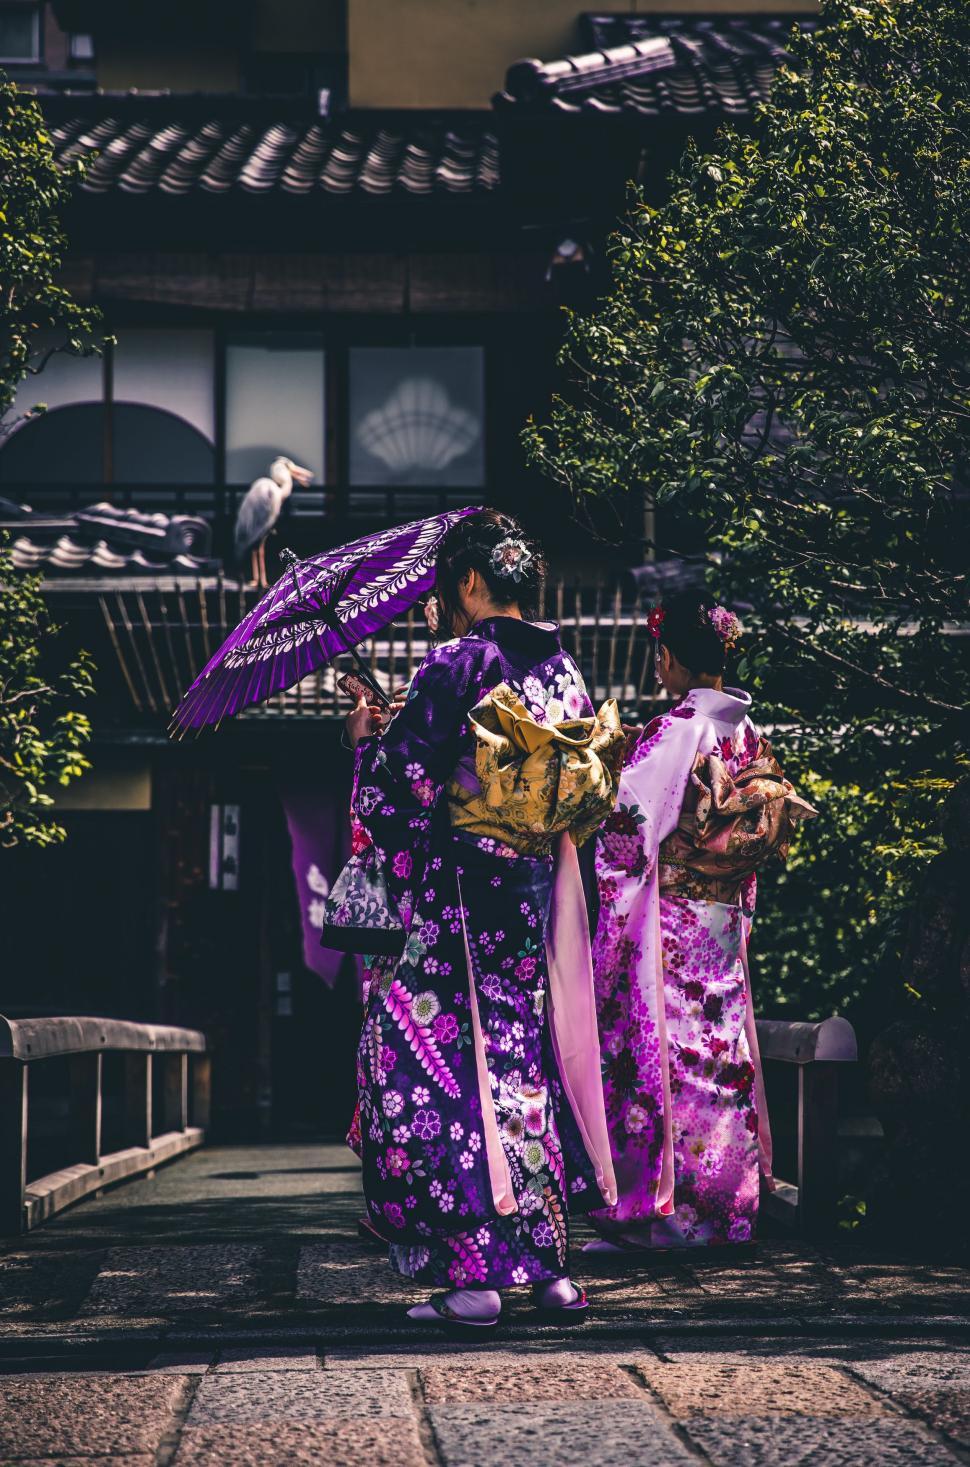 Free Image of Woman in Purple Kimono Holding Umbrella 